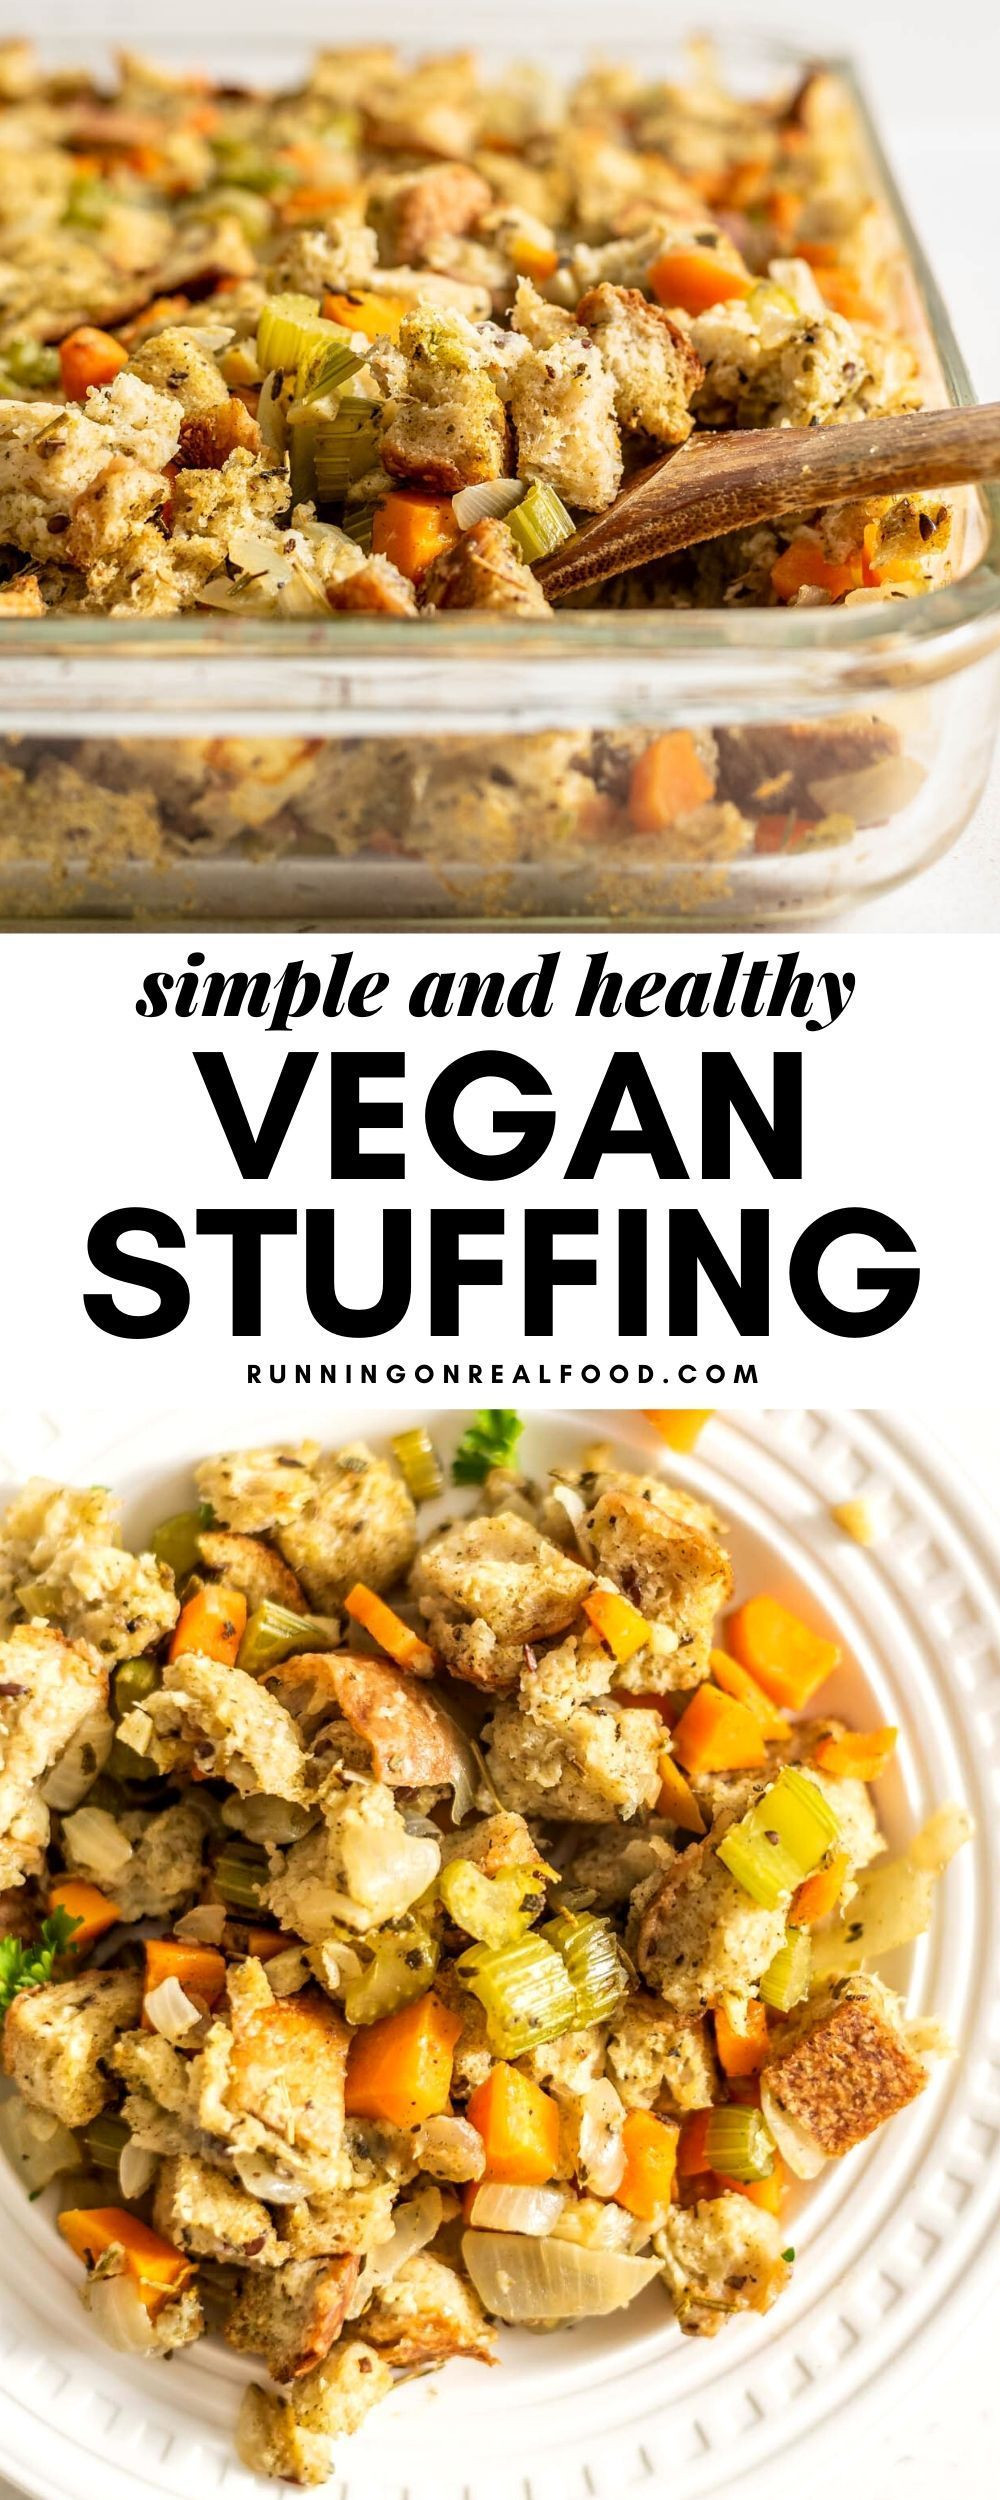 Vegetarian Stuffing Recipe Thanksgiving
 This simple healthy vegan stuffing recipe is easy to make